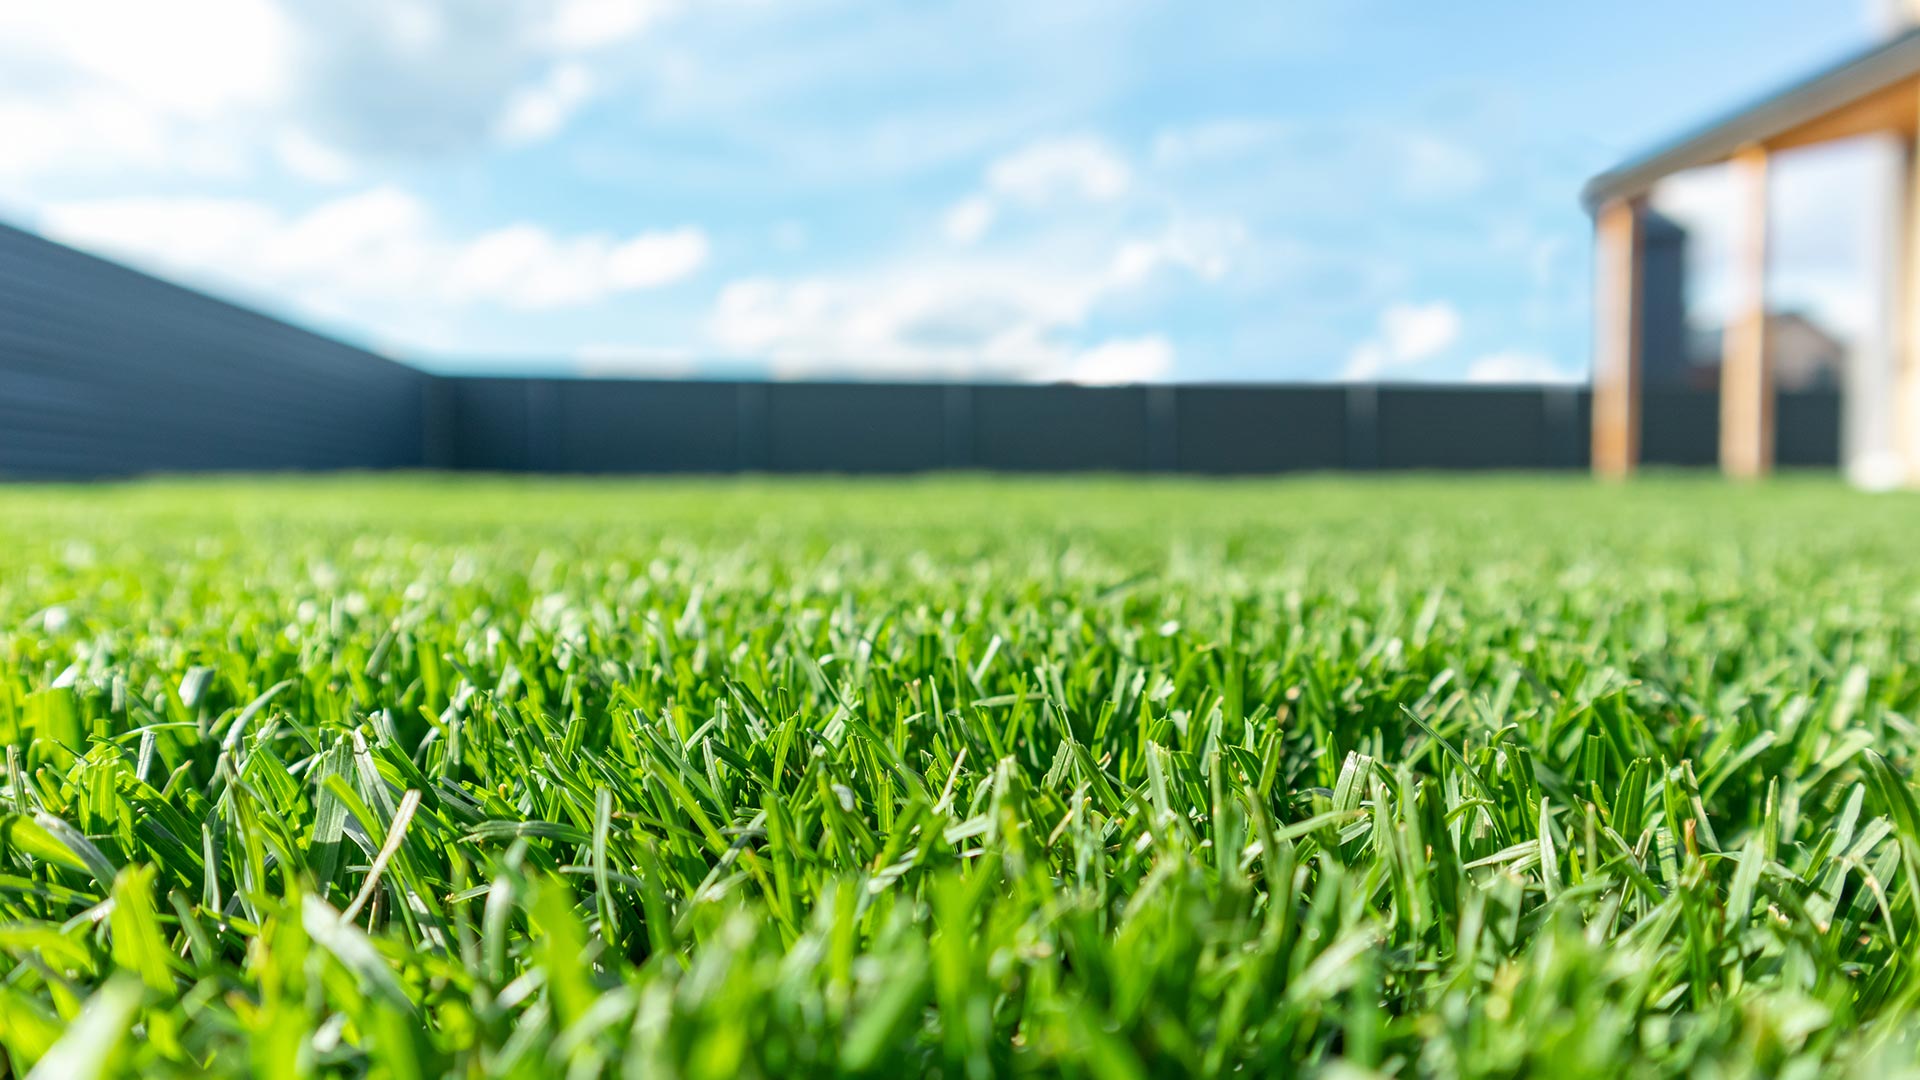 Fertilized grass blades in lawn in Dallas, TX.